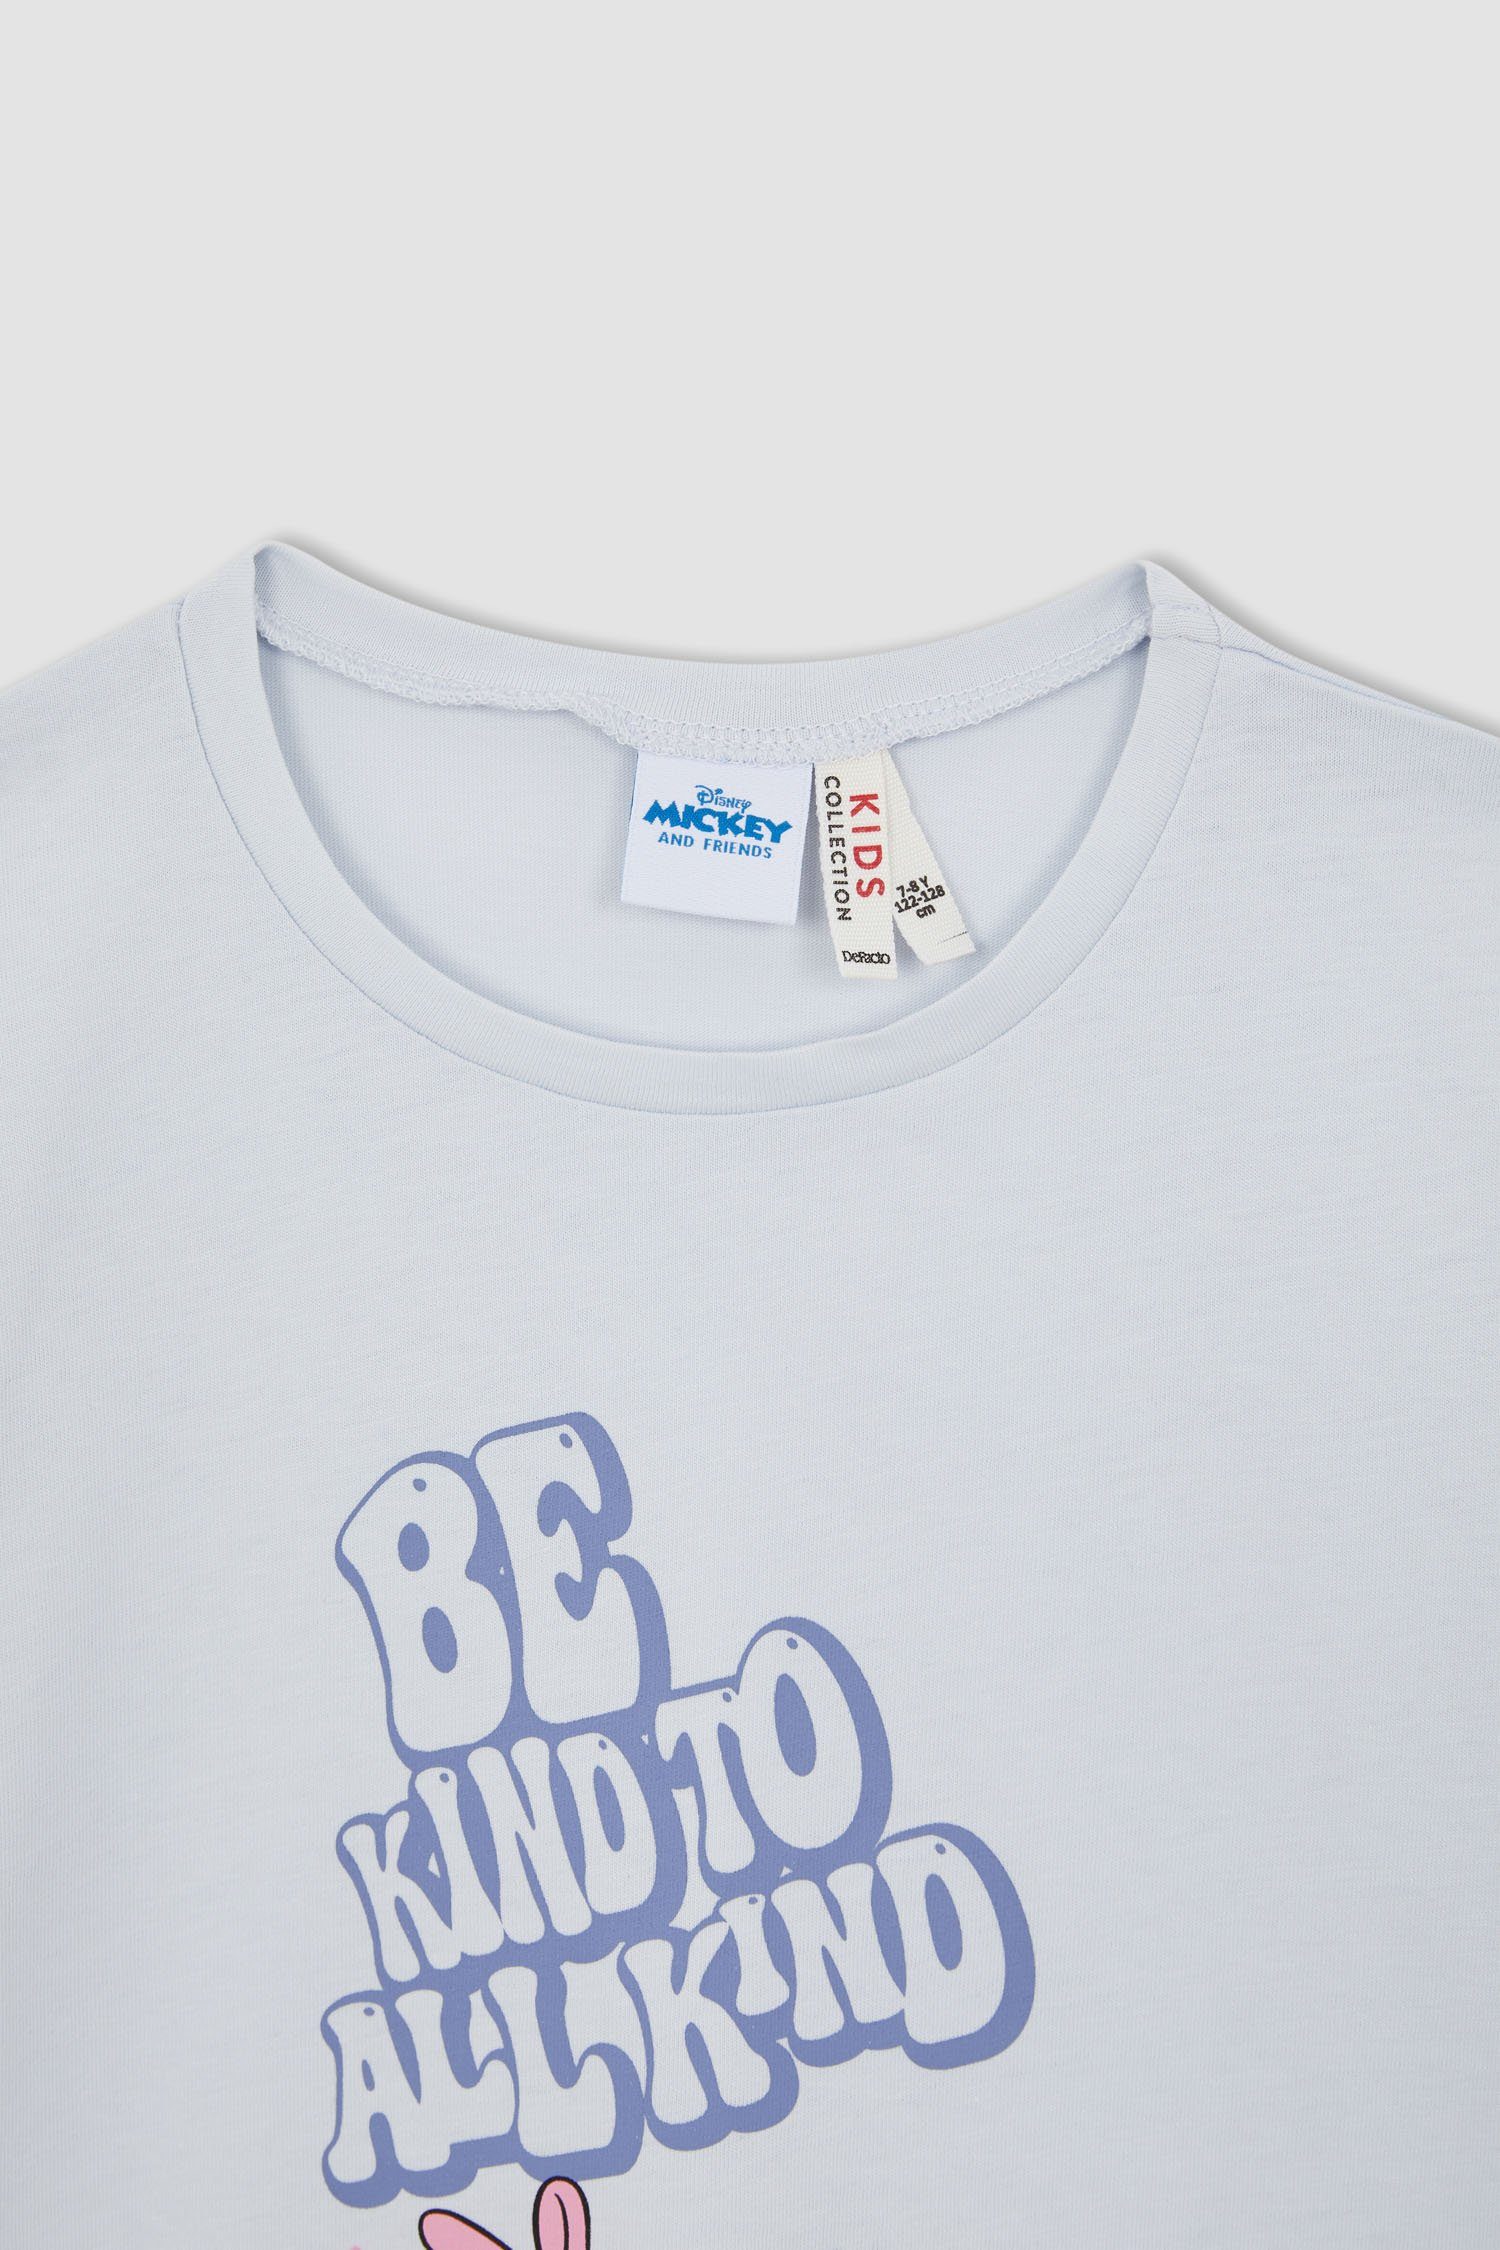 Mickey Mouse T-Shirt FIT DeFacto T-Shirt & REGULAR Friends